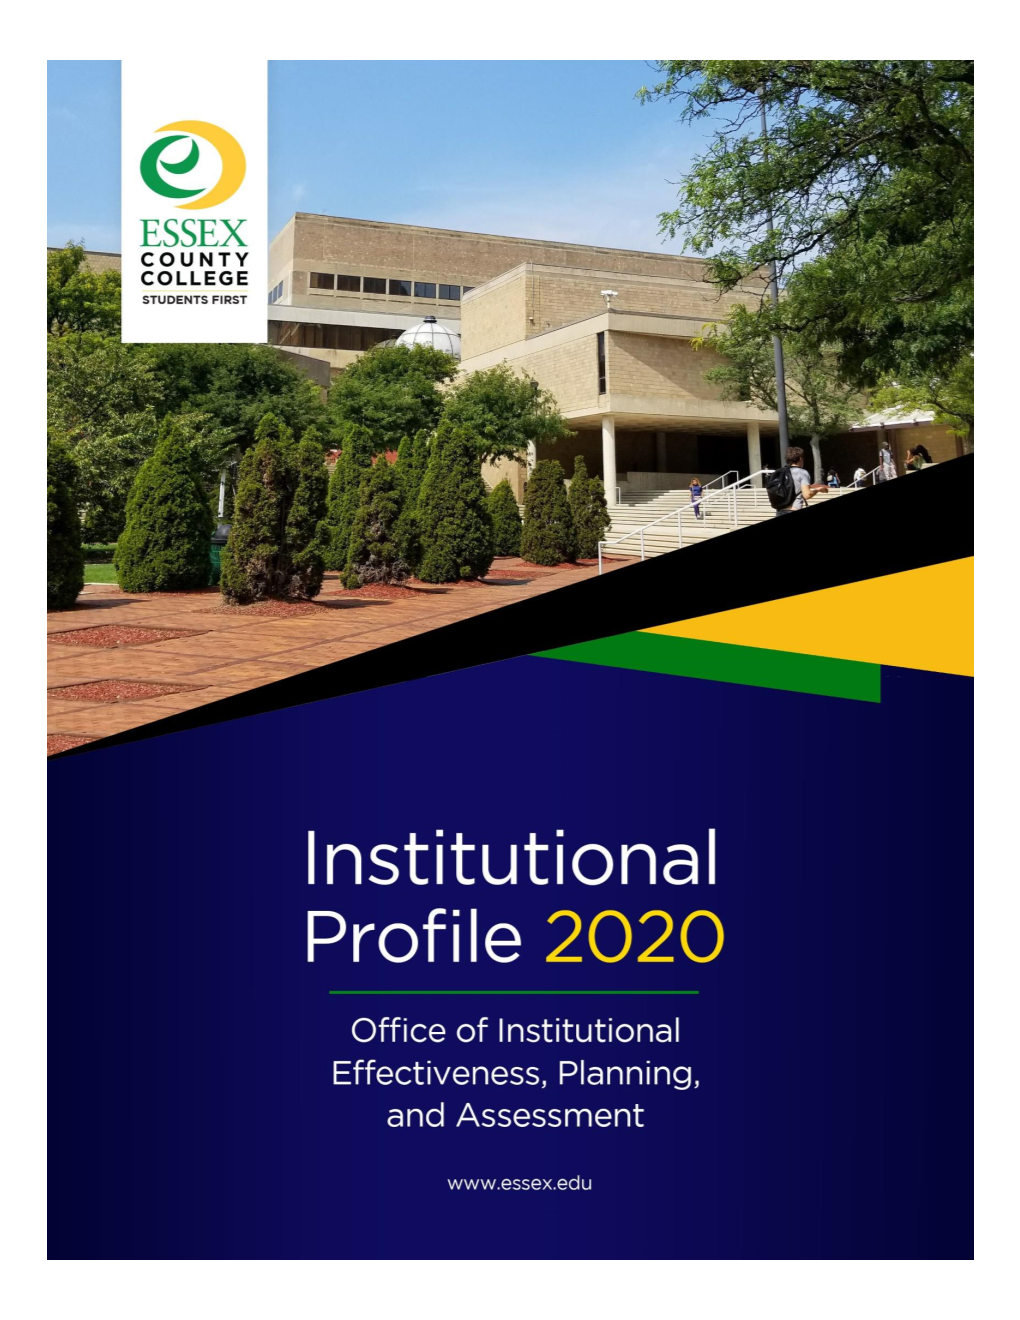 Essex County College Annual Institutional Profile